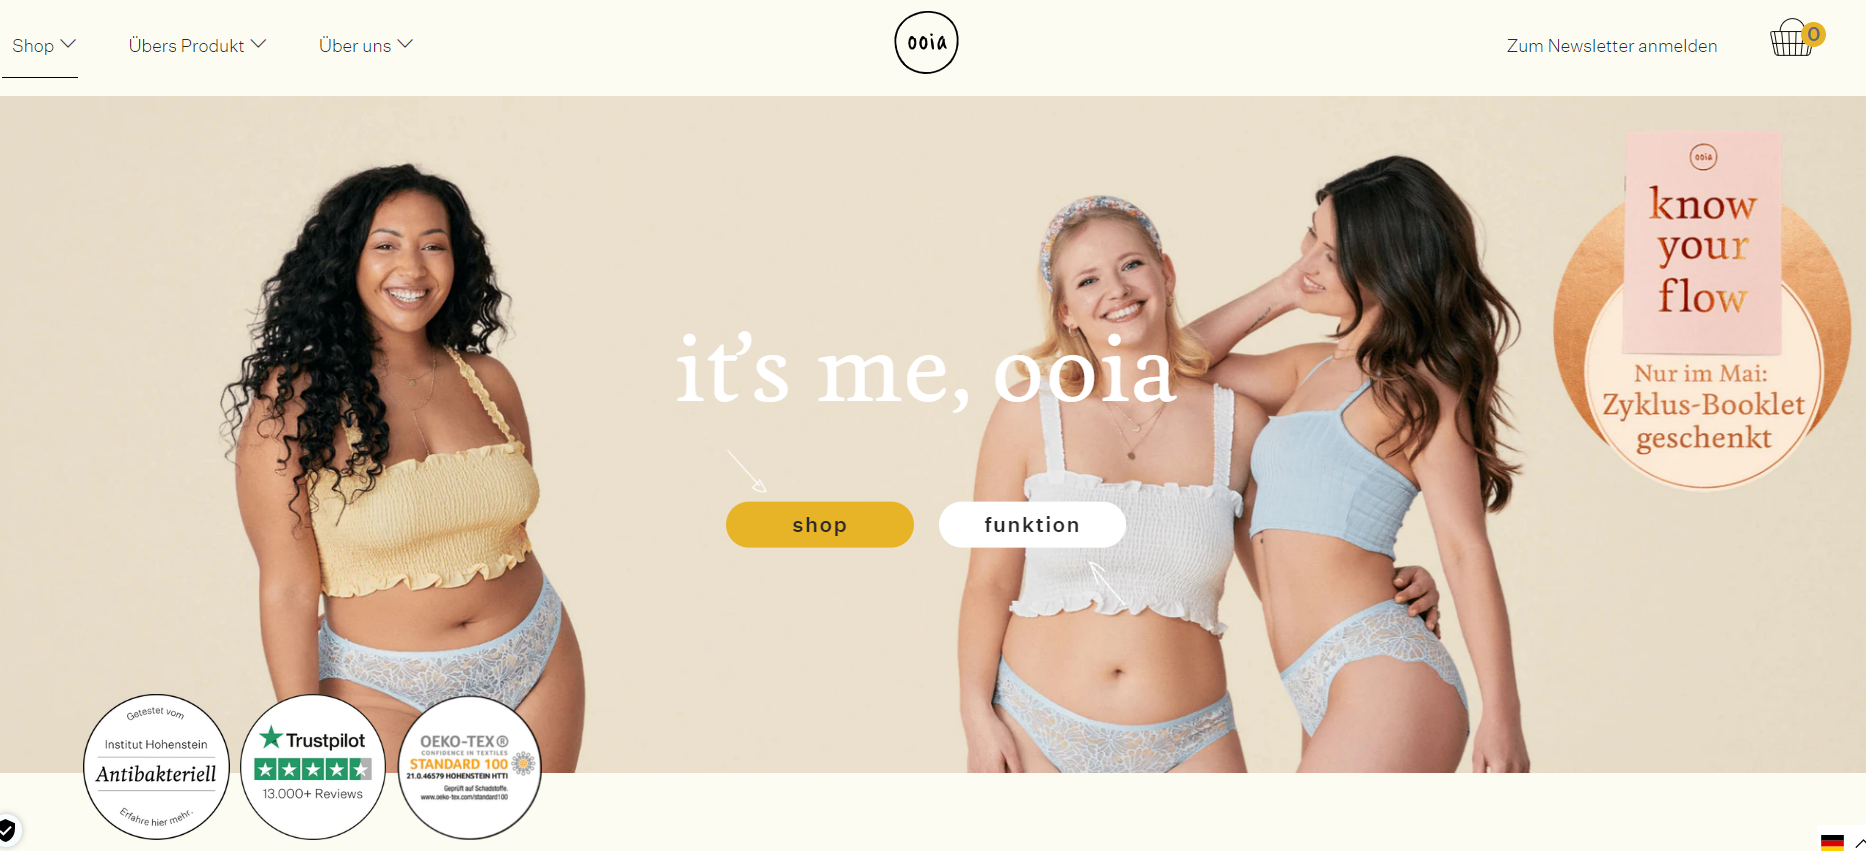 Die Website des Fashion E-Commerce ooia. 